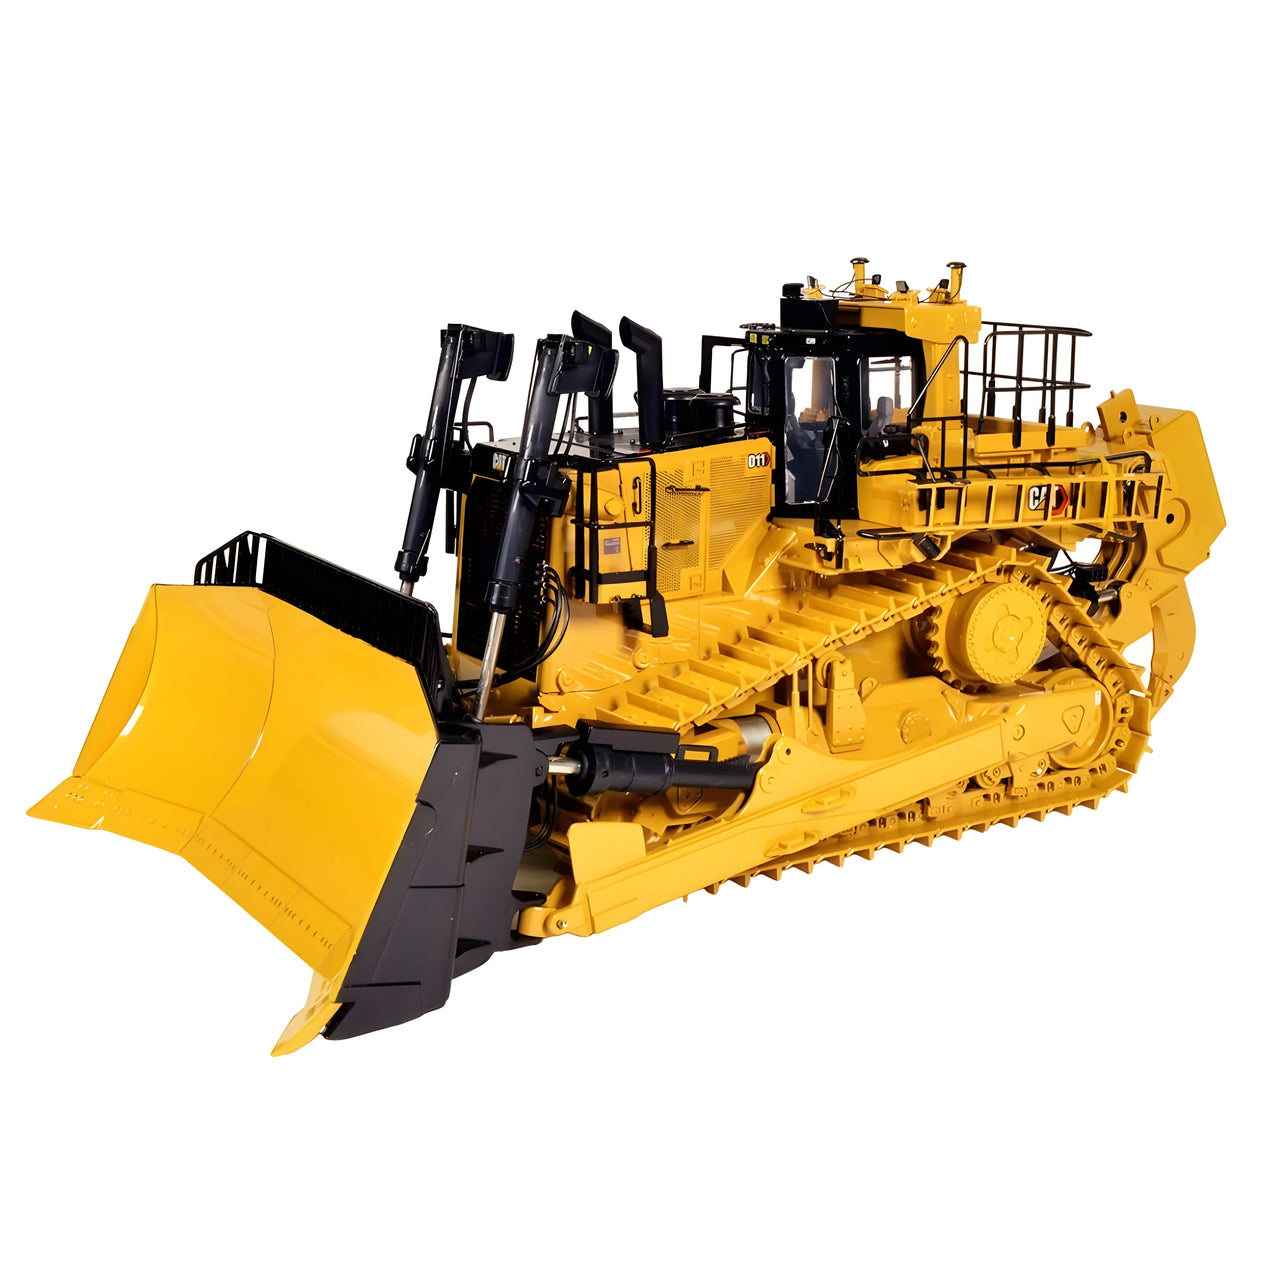 CCM24001 Caterpillar D11 Crawler Tractor Scale 1:24 (Discontinued Model)